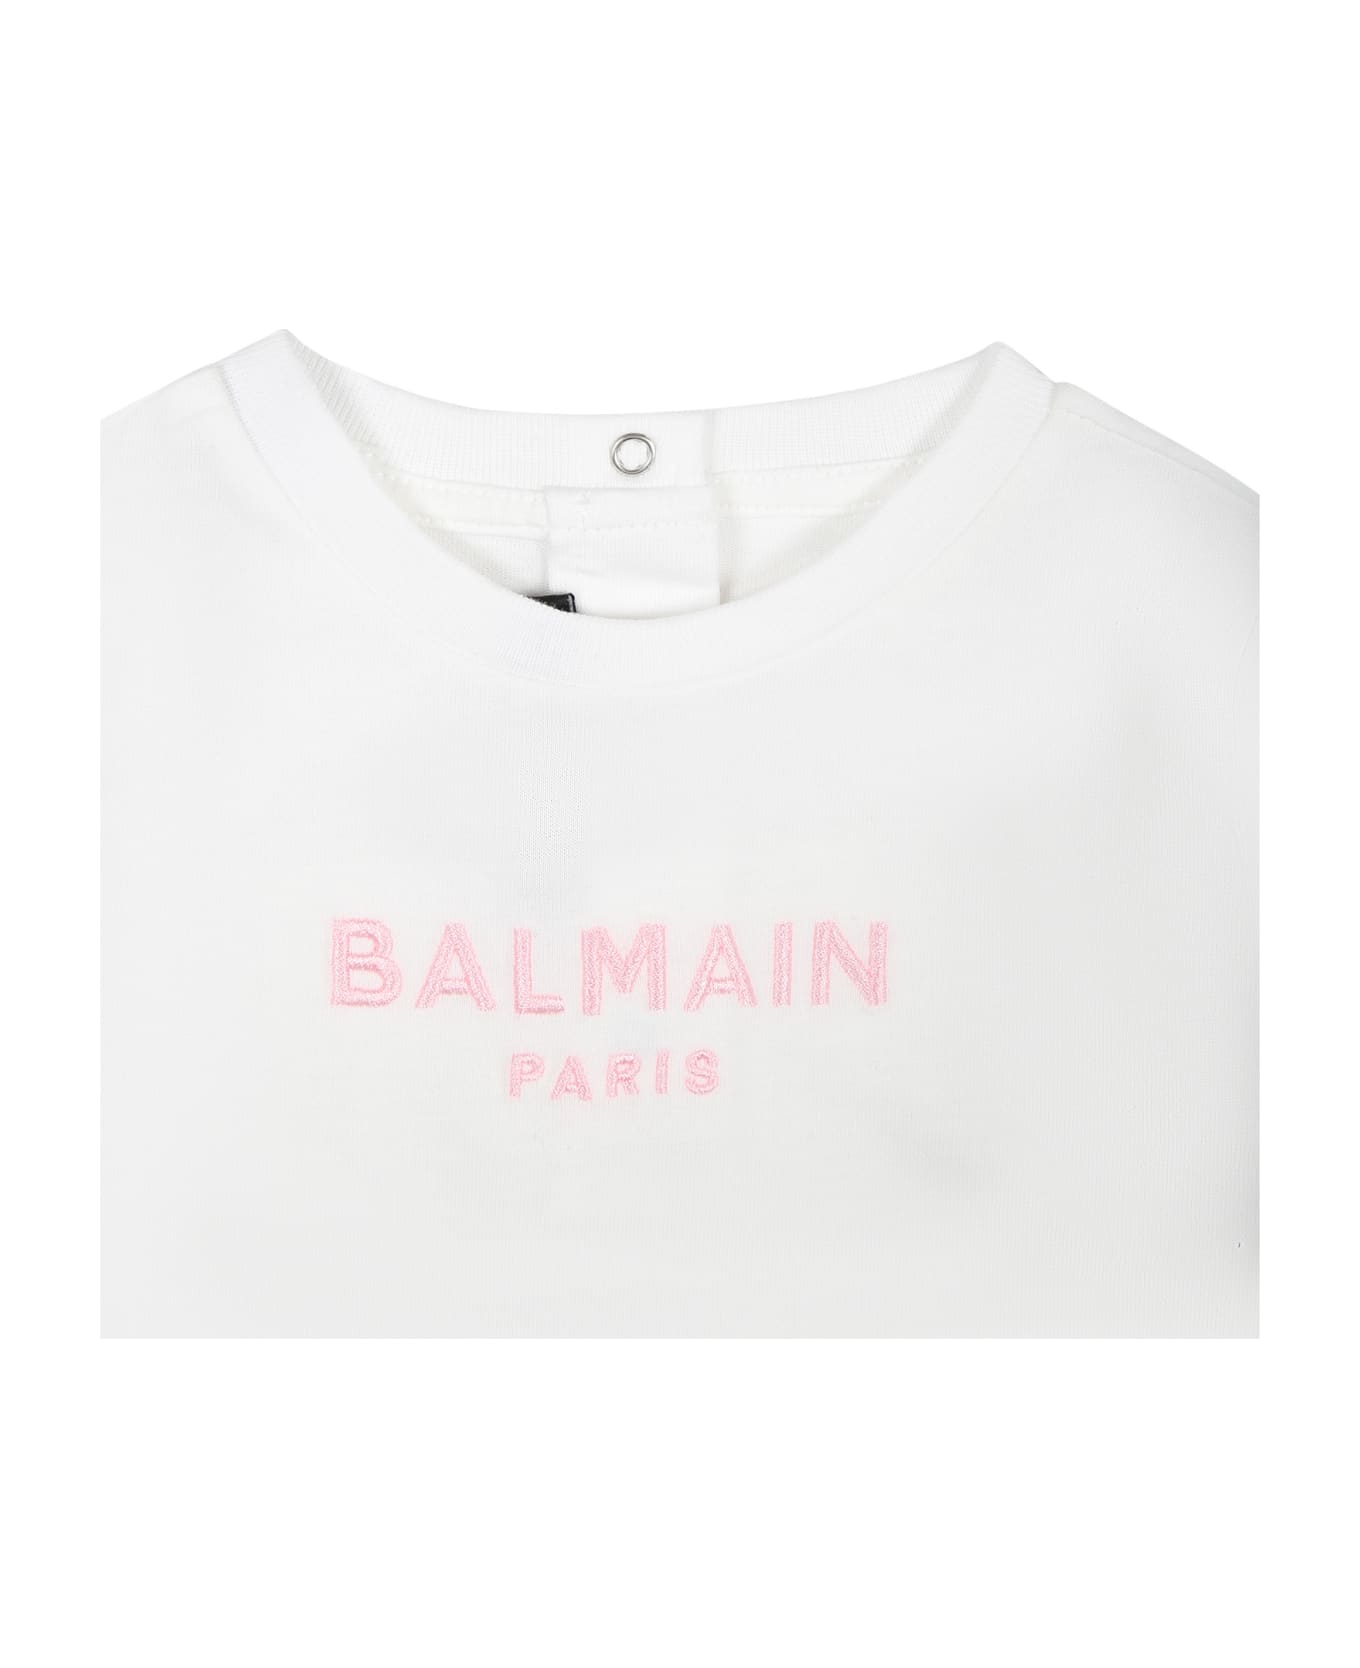 Balmain White T-shirt For Baby Girl With Logo - White